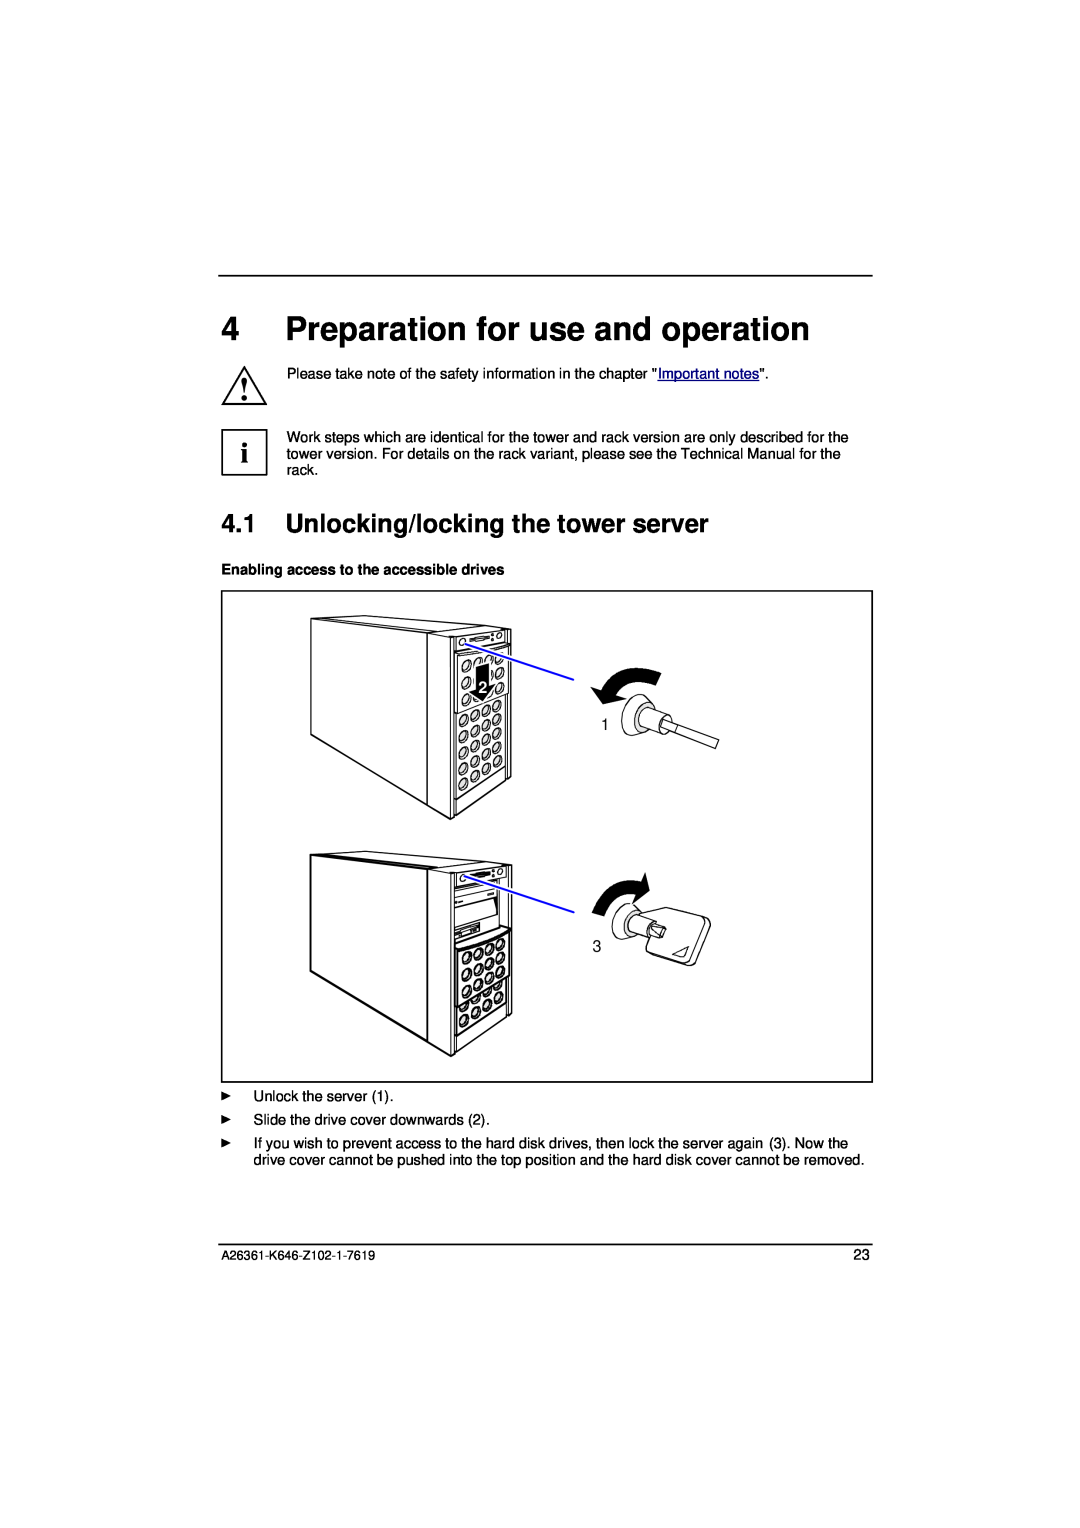 Fujitsu B120 manual Preparation for use and operation, Unlocking/locking the tower server 